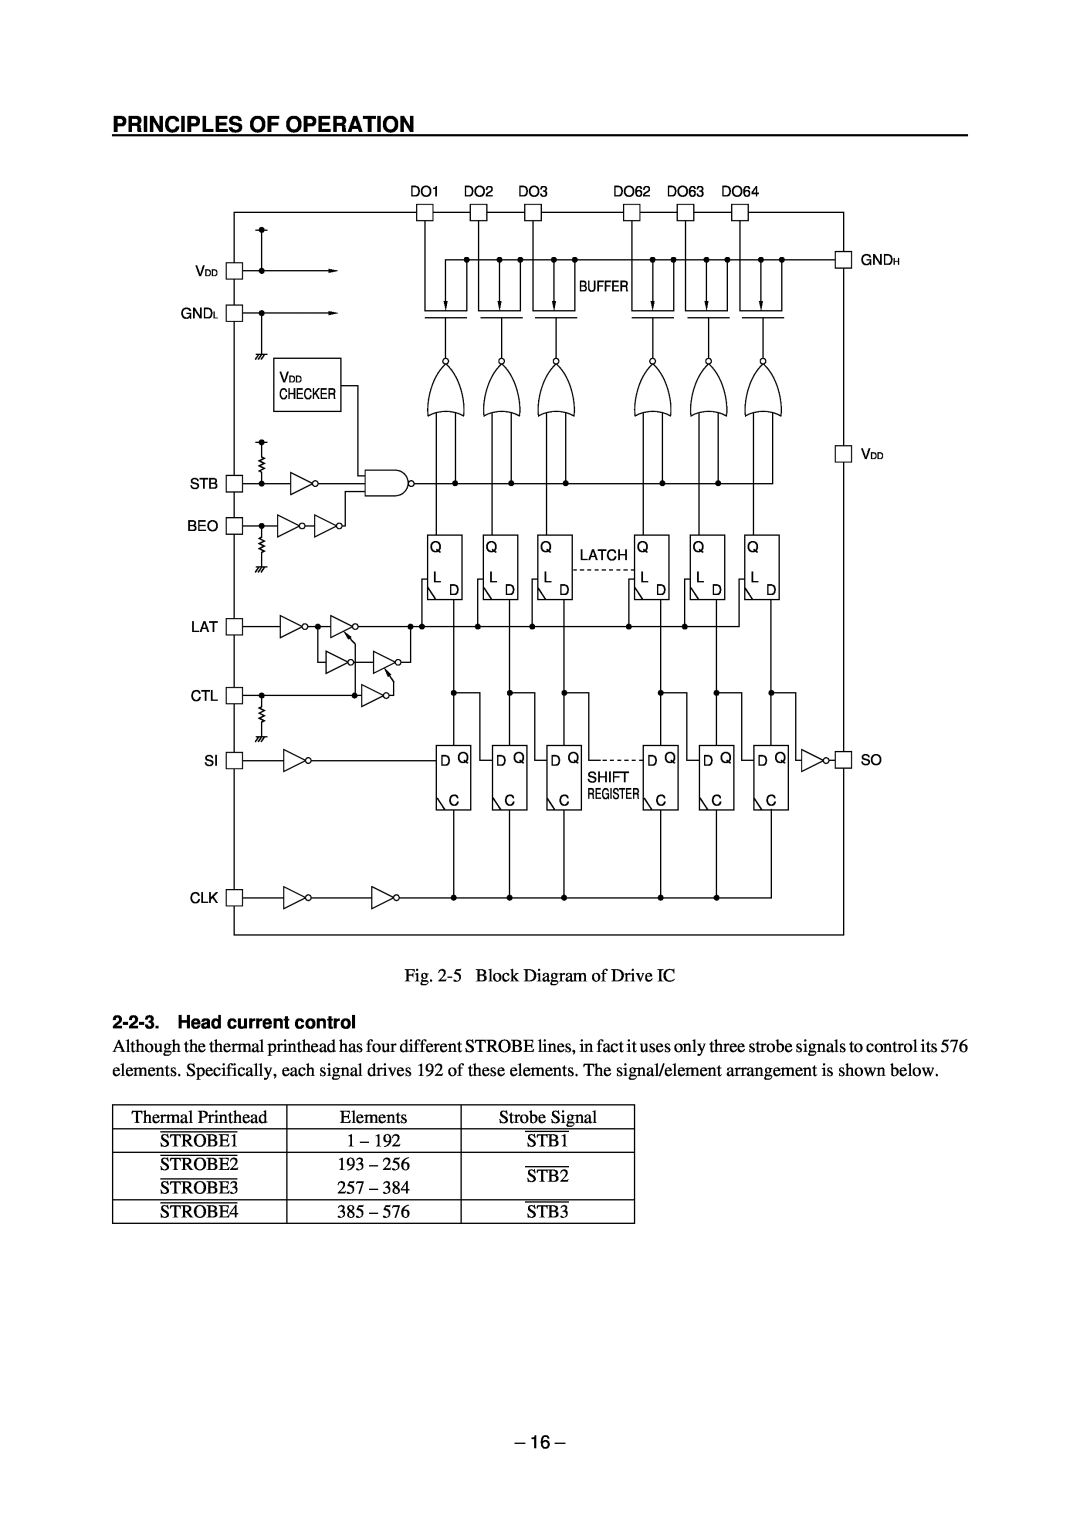 Star Micronics TSP200 technical manual Principles Of Operation, 5 Block Diagram of Drive IC 